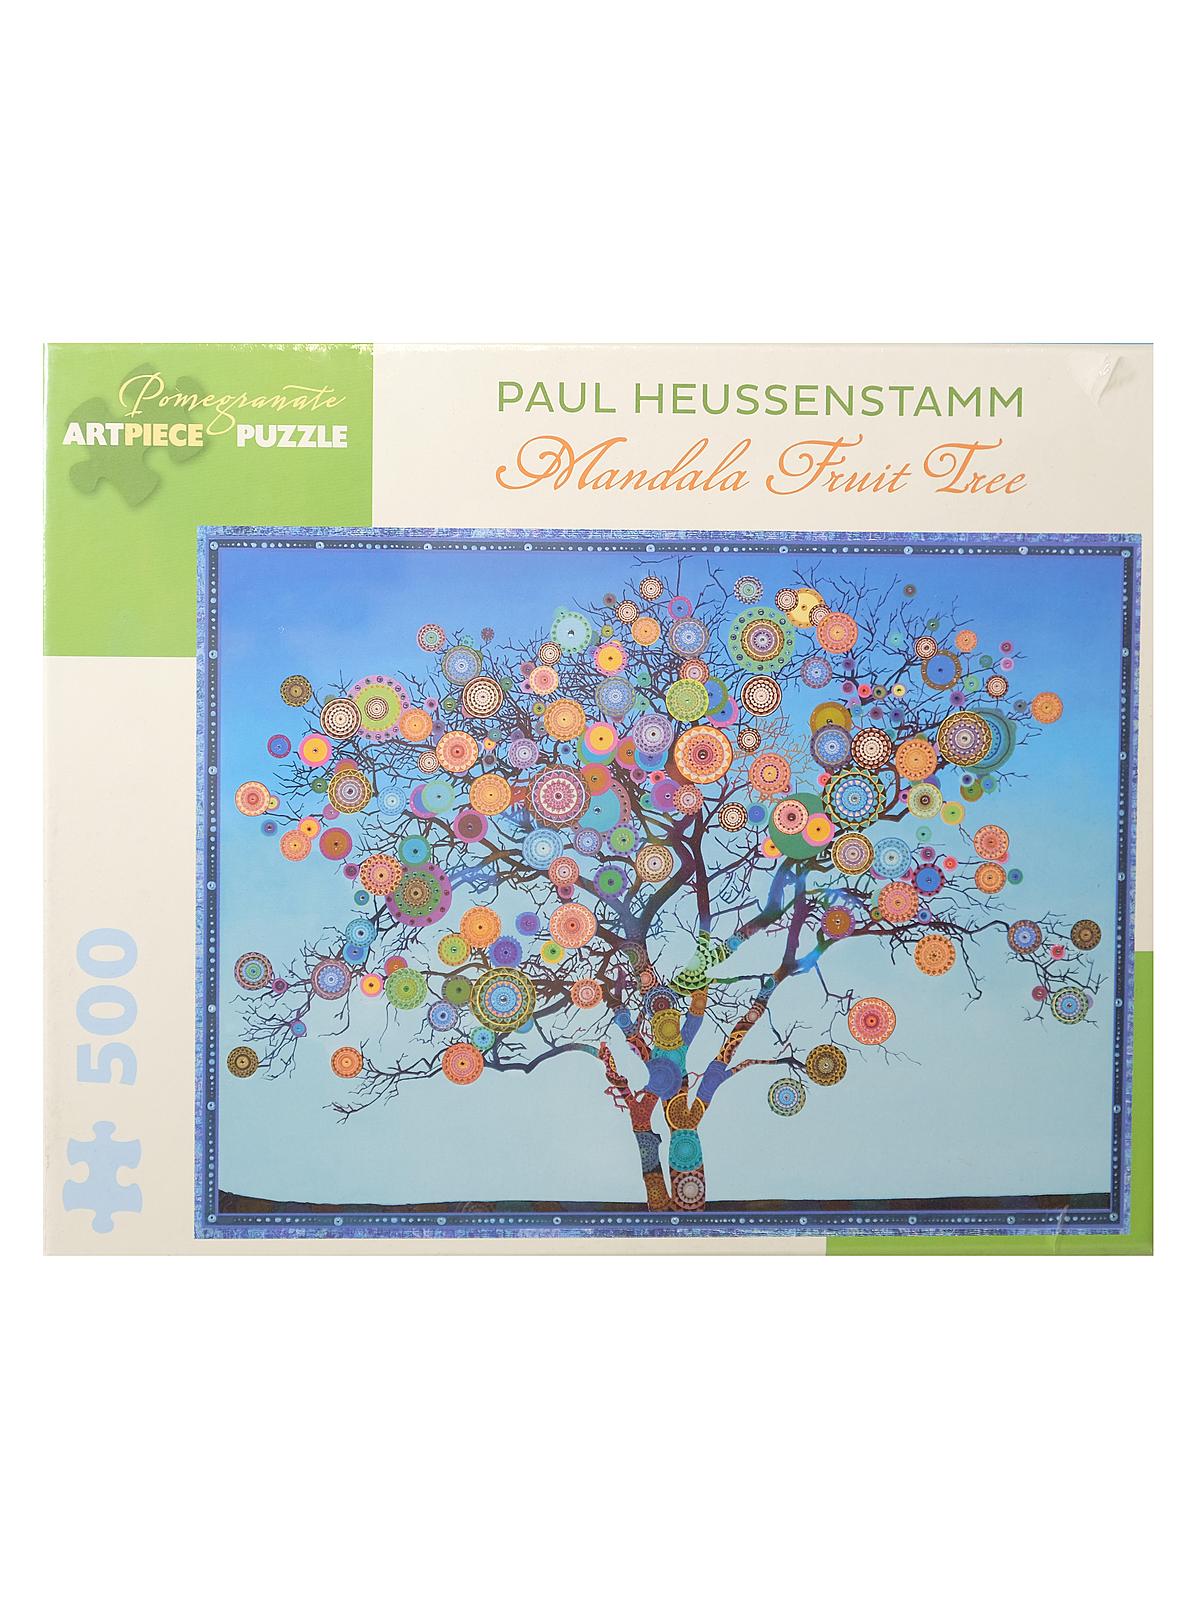 Paul Heussenstamm: Mandala Fruit Tree